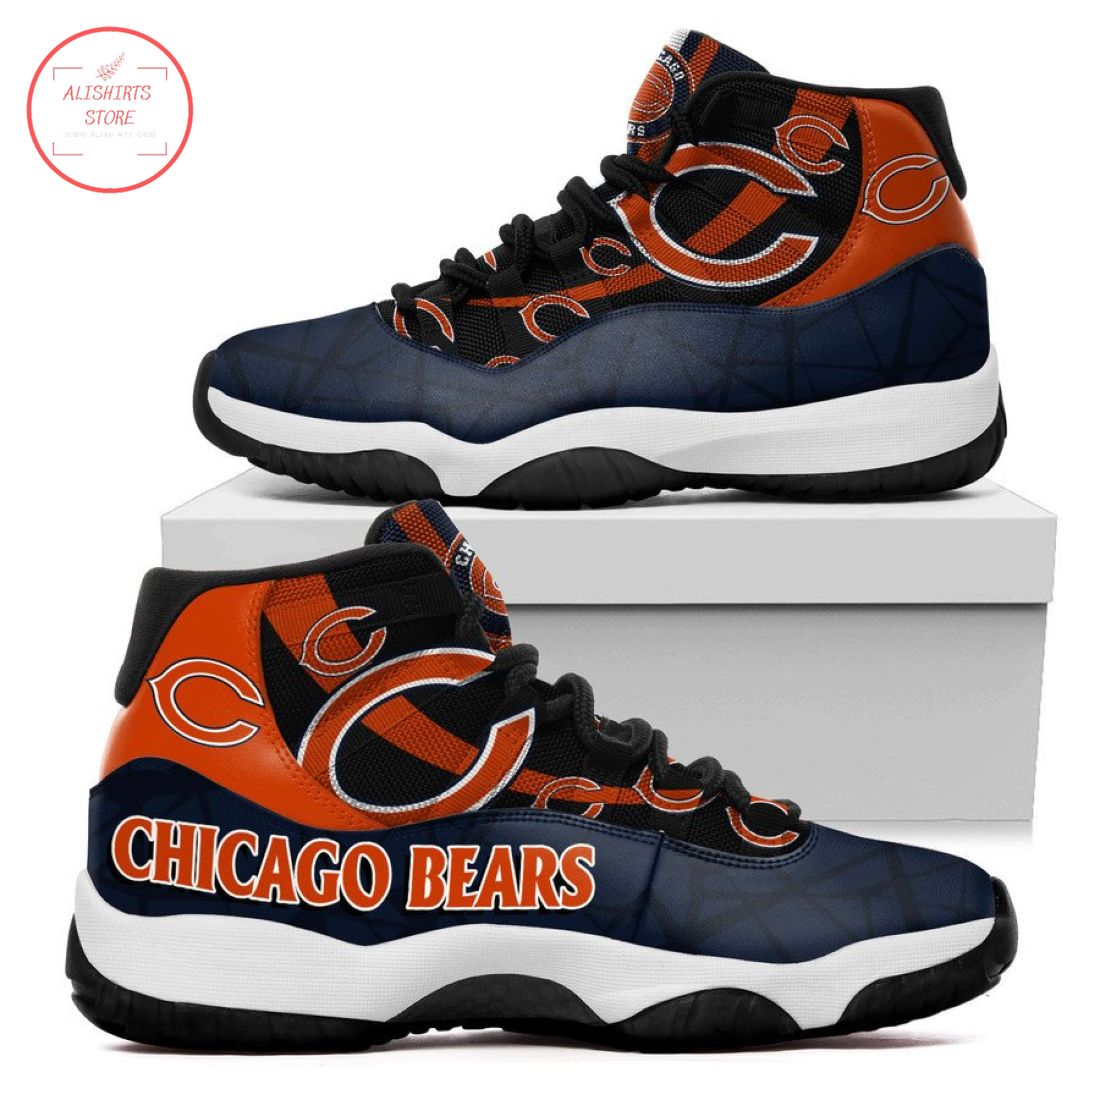 NFL Chicago Bears New Air Jordan 11 Sneakers Shoes